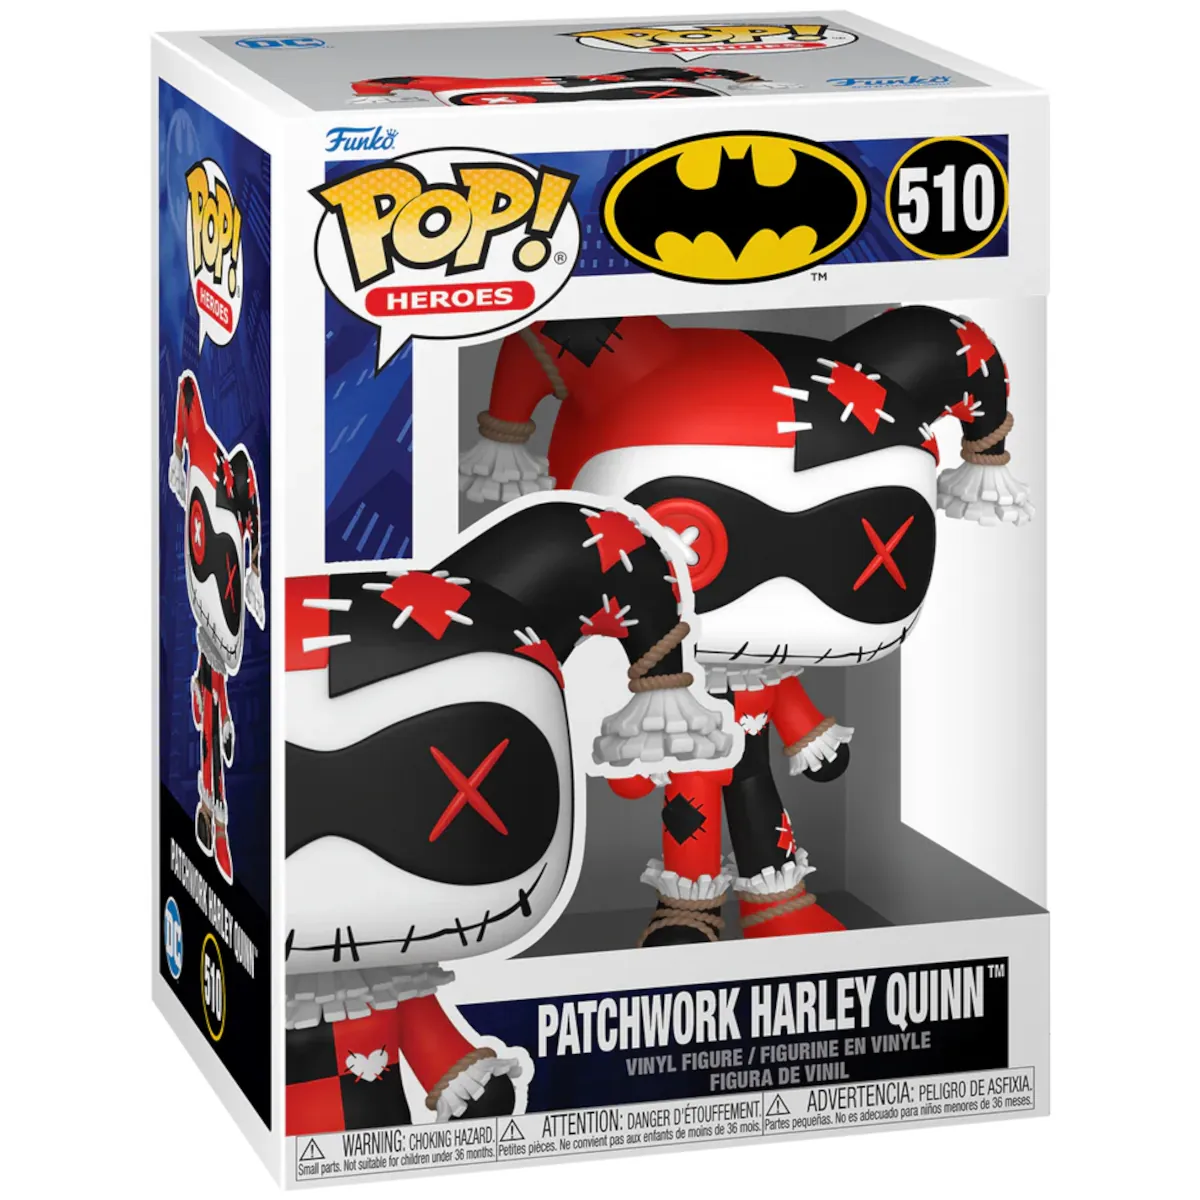 80905 Funko Pop! Heroes - DC Comics Batman - Patchwork Harley Quinn Collectable Vinyl Figure Box Front